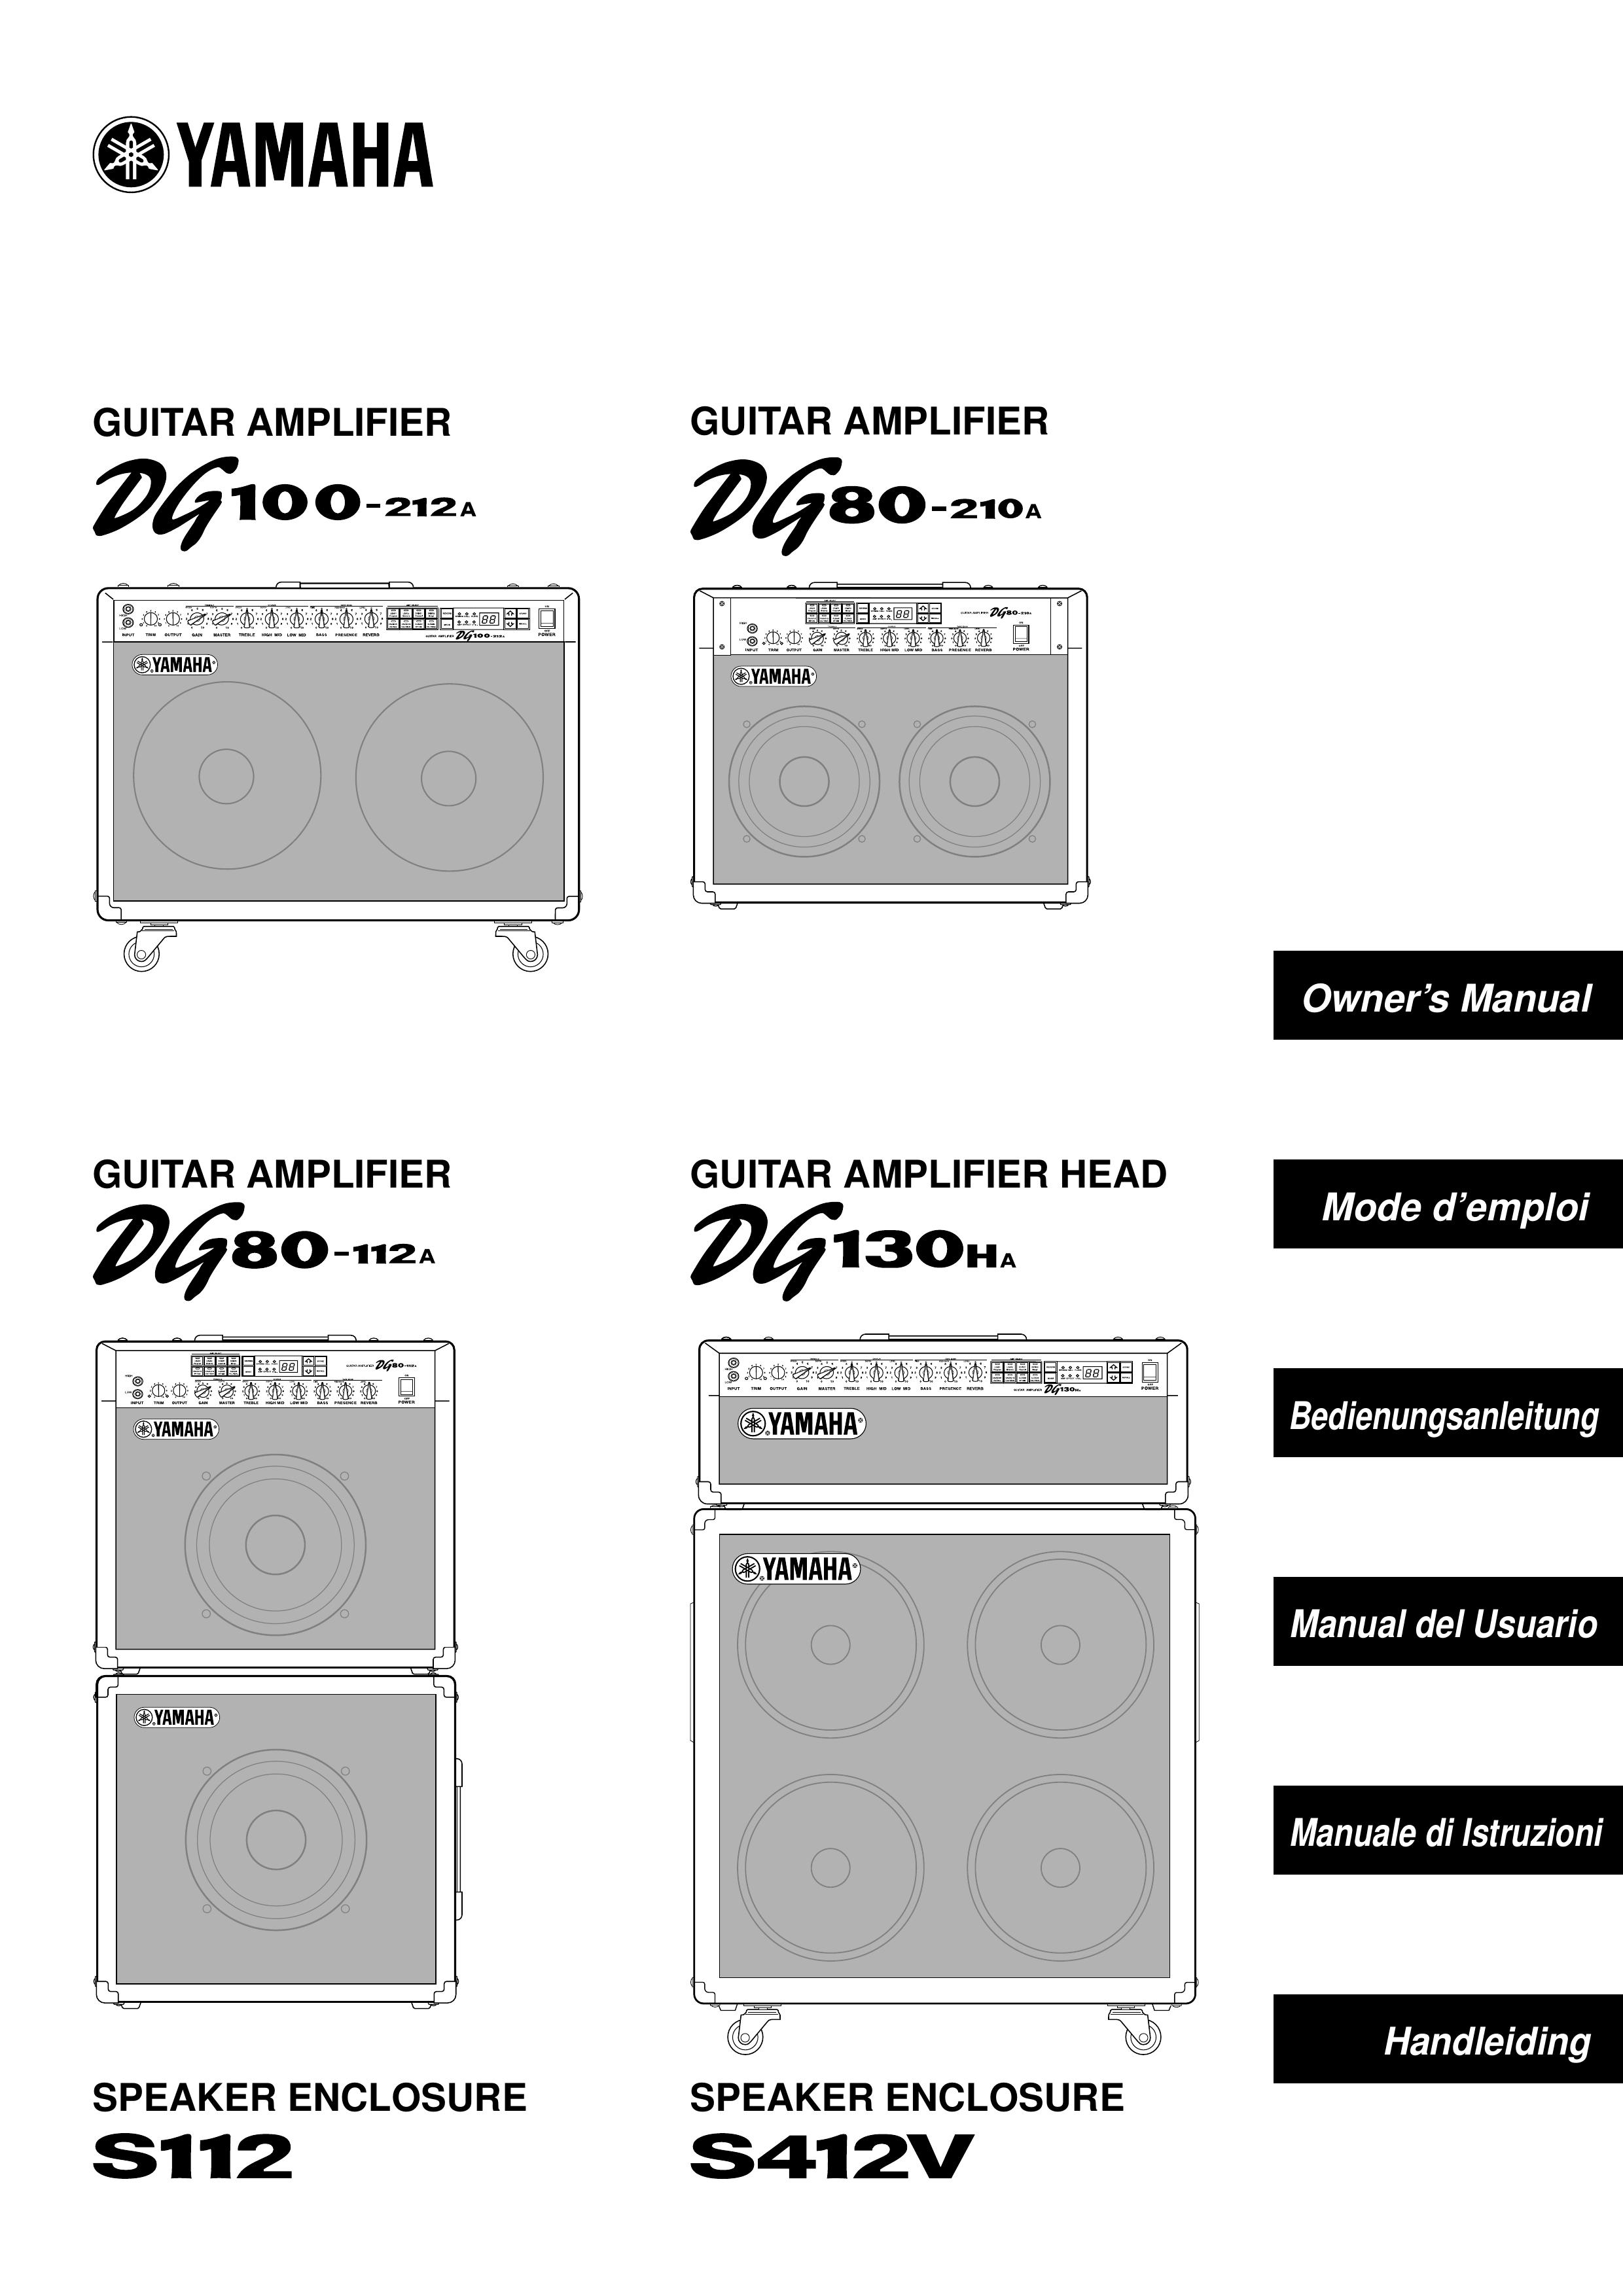 Yamaha DG100-212A Musical Instrument Amplifier User Manual